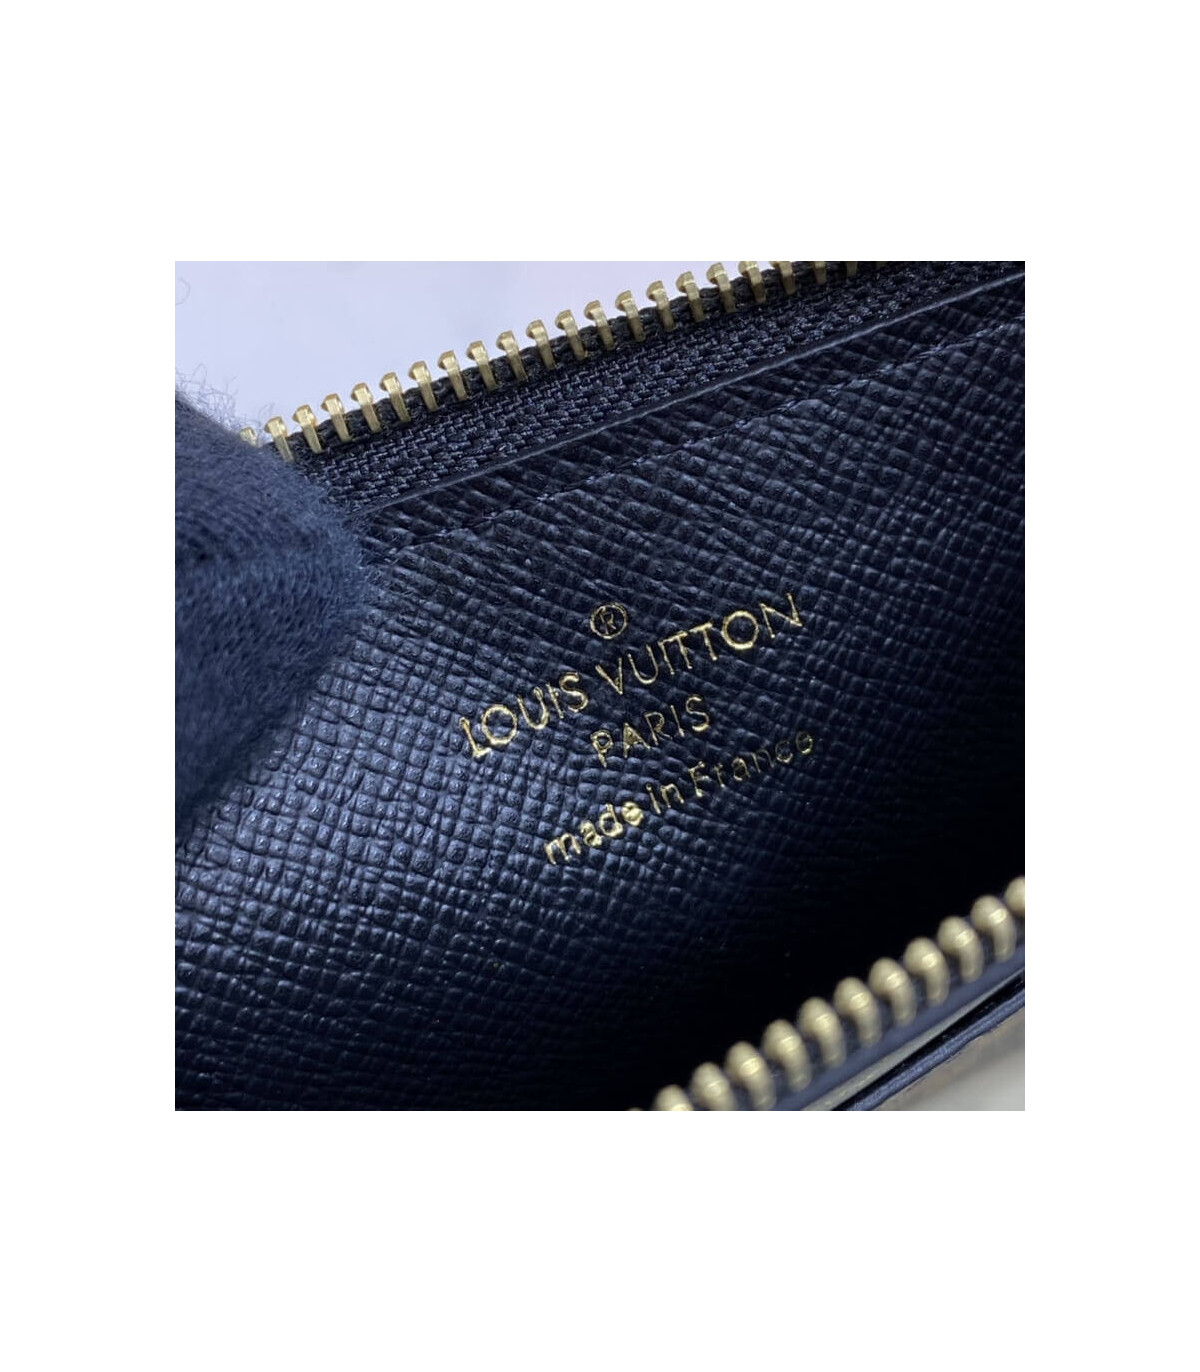 Shop Louis Vuitton MONOGRAM 2021-22FW Slim purse (M80390, M80348) by  PicoJr.